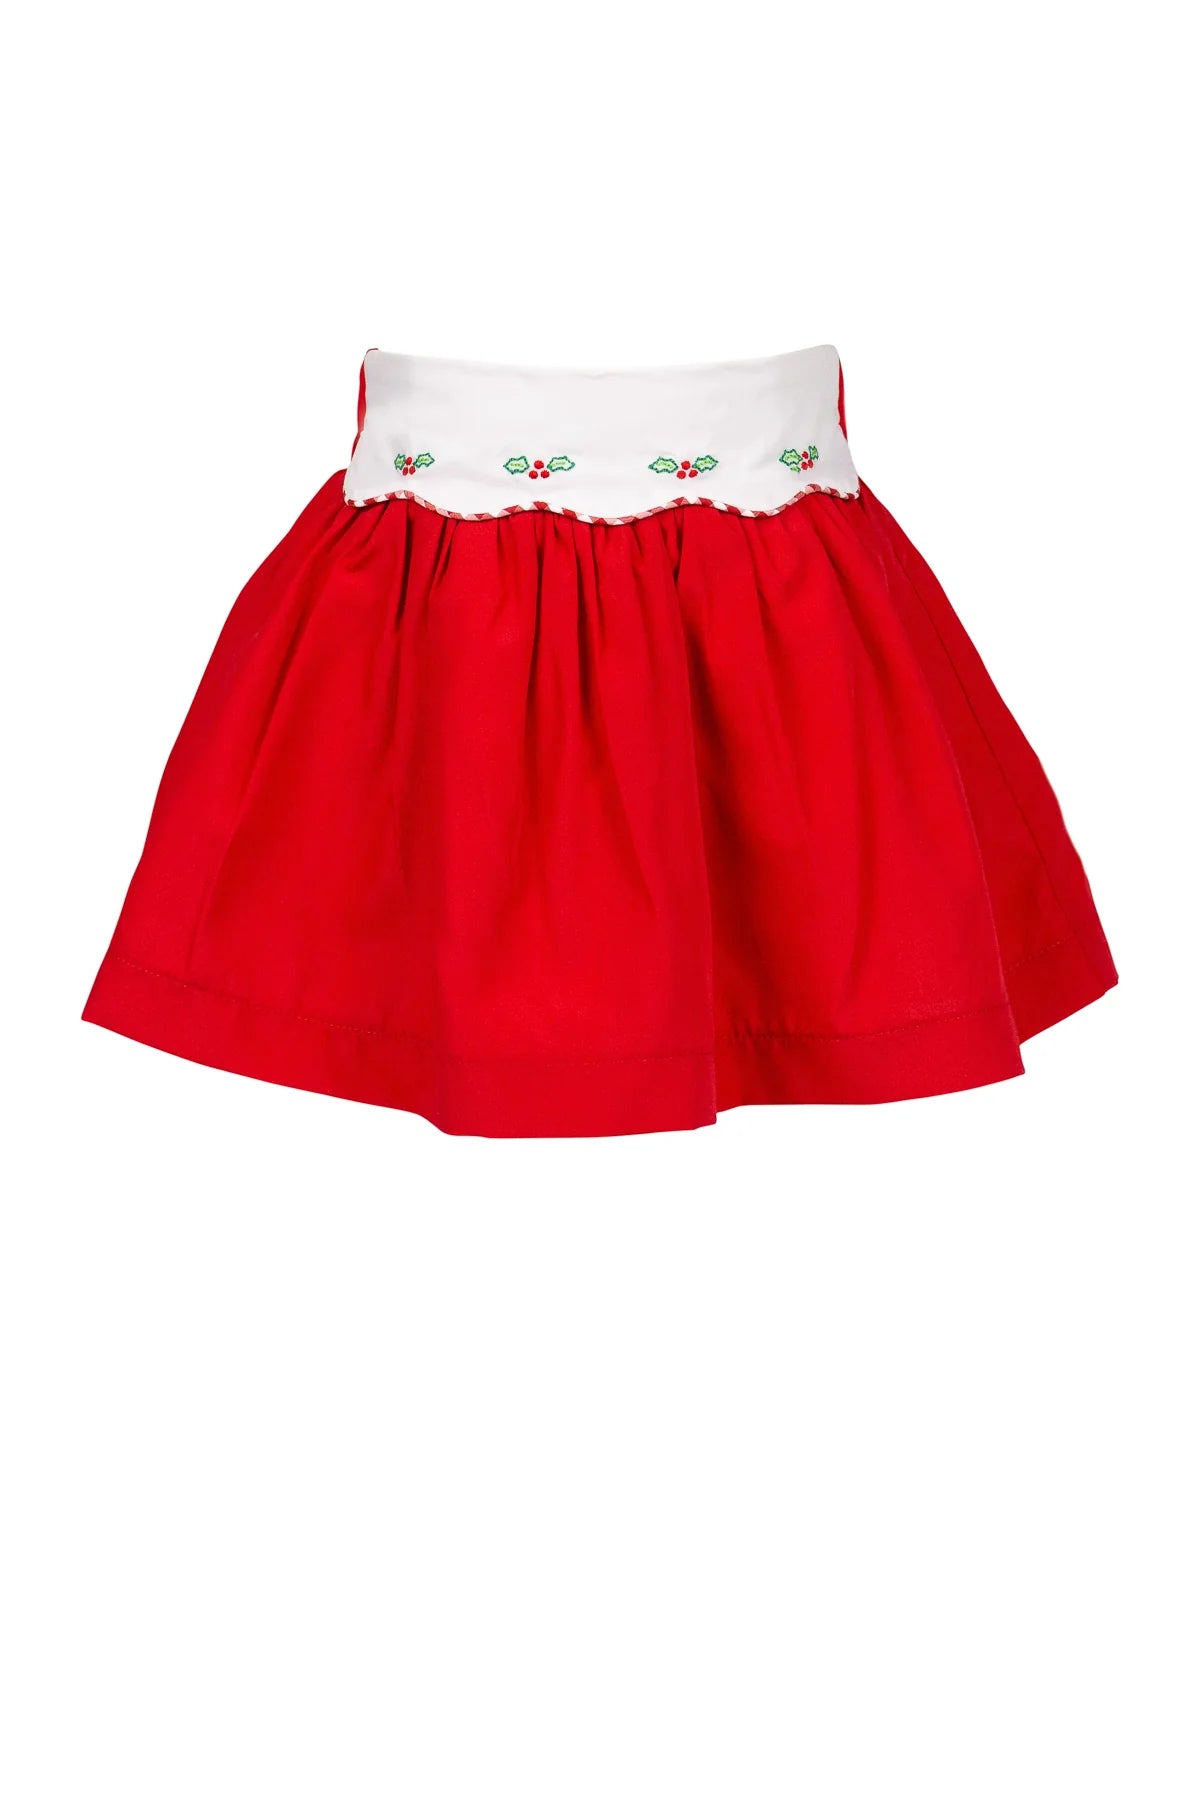 Red Tinsel Holly Christmas Skirt